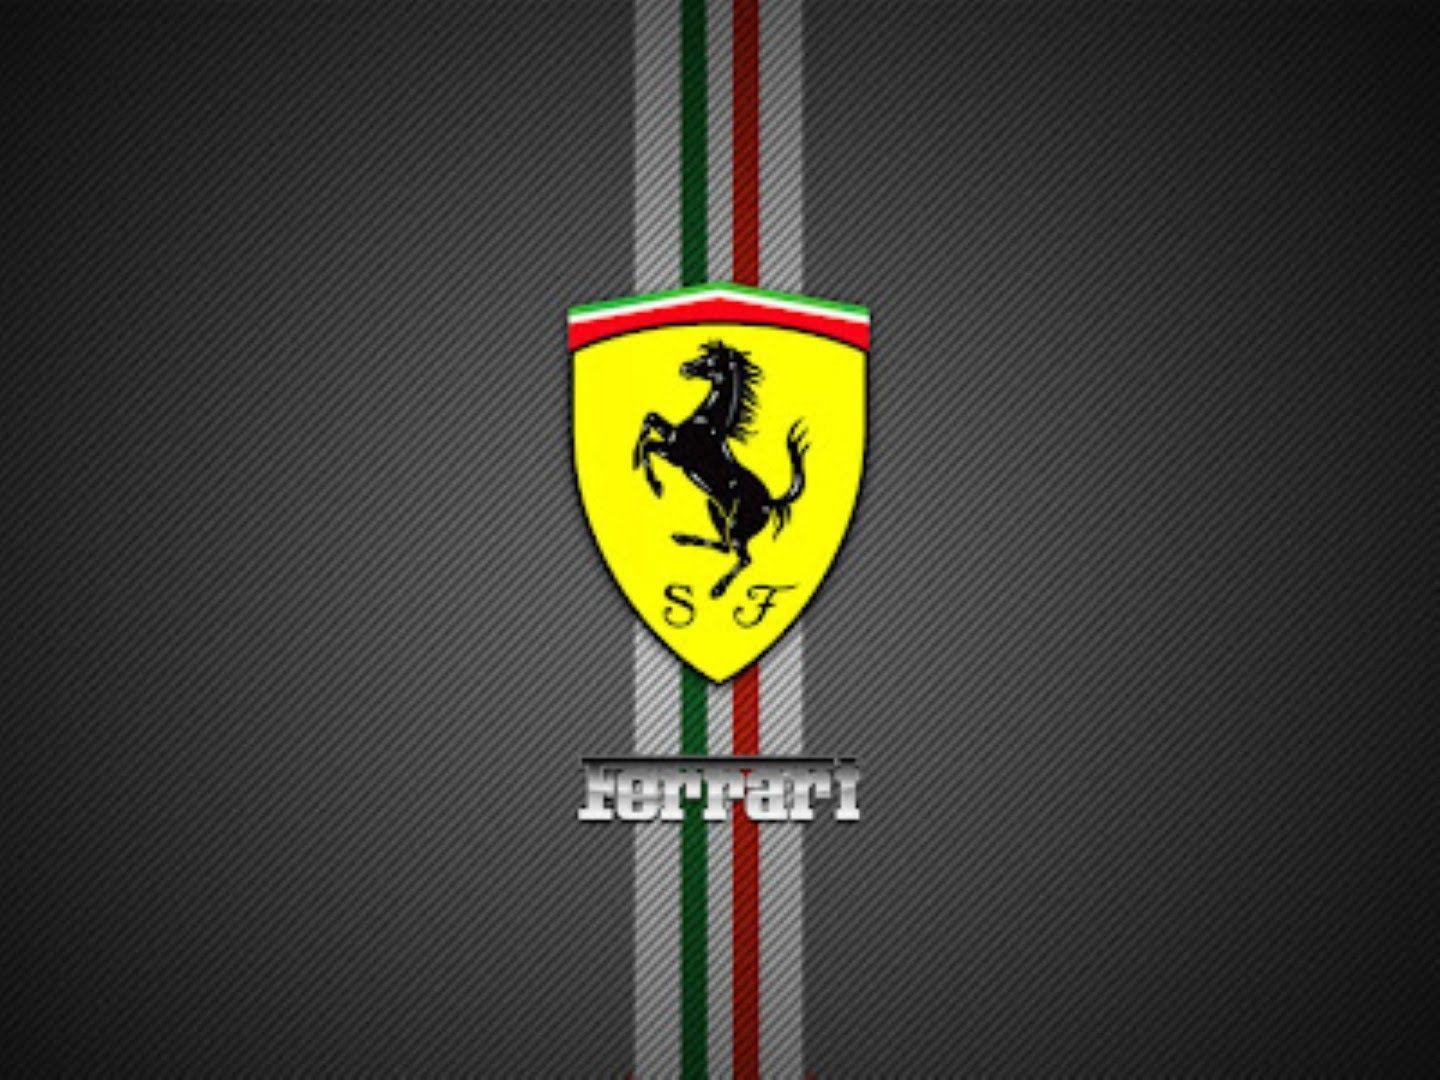 ferrari logo wallpaper. cool Cars image wallpaper